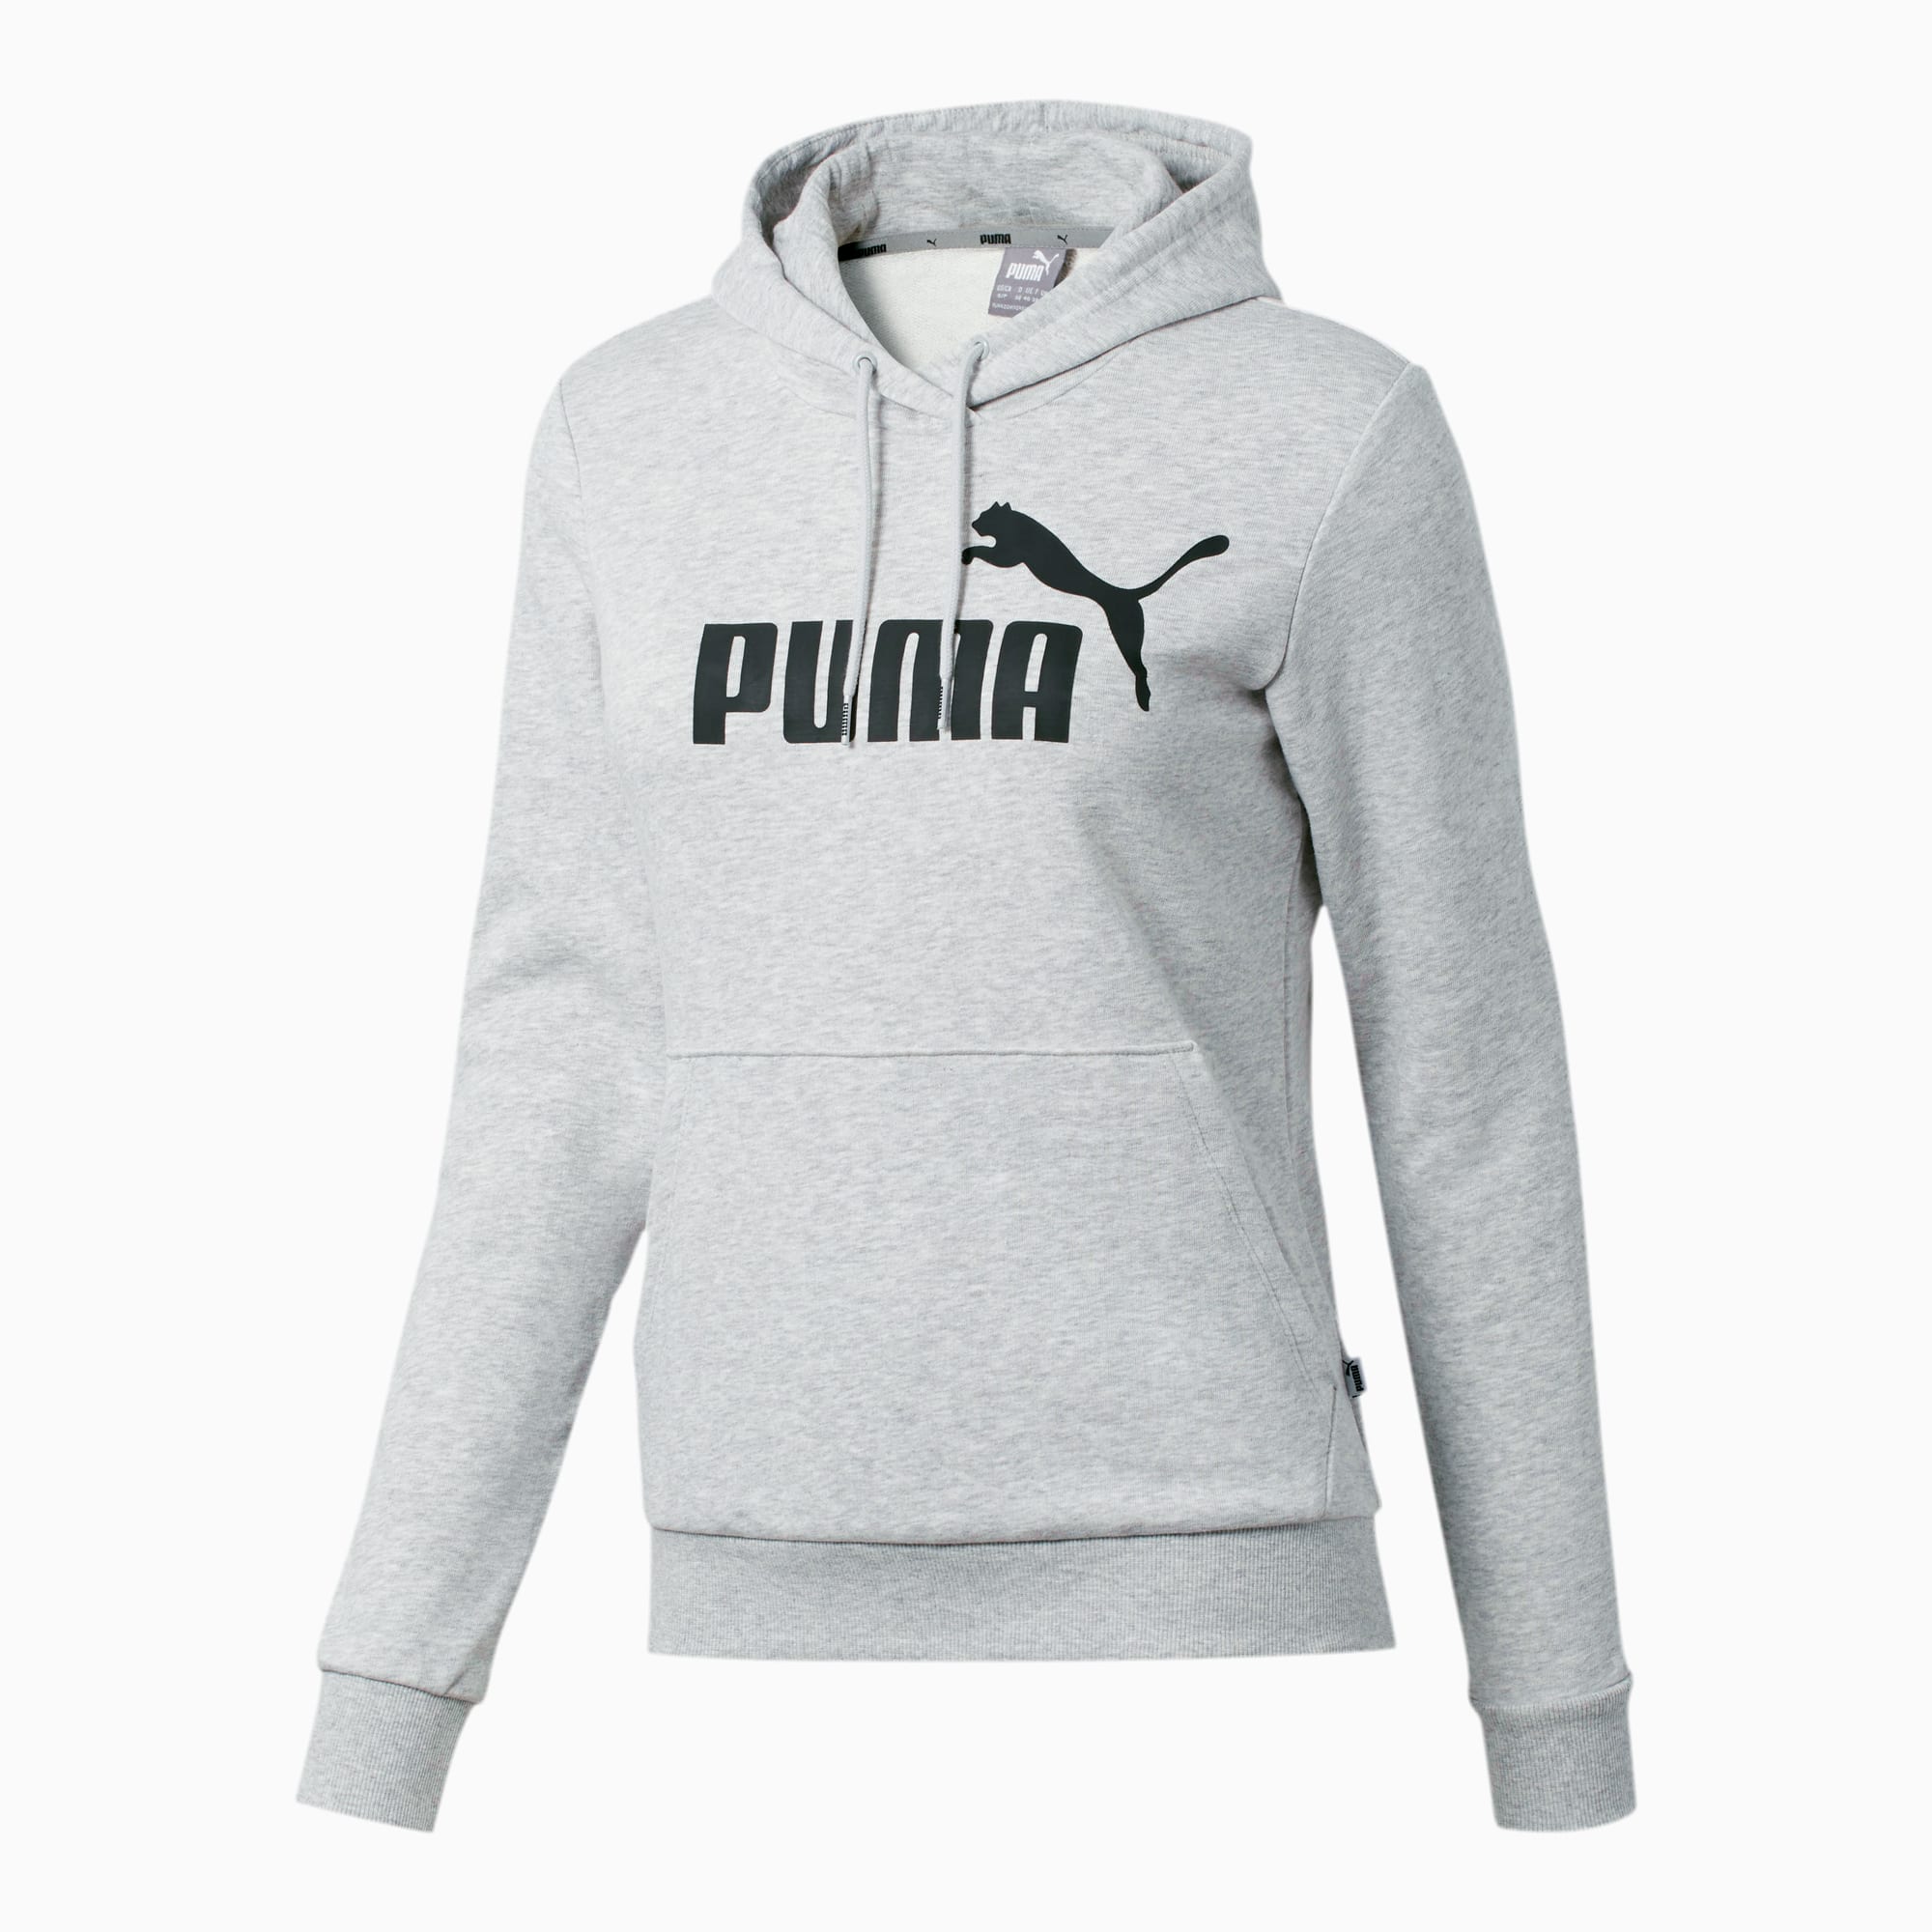 black and white puma hoodie